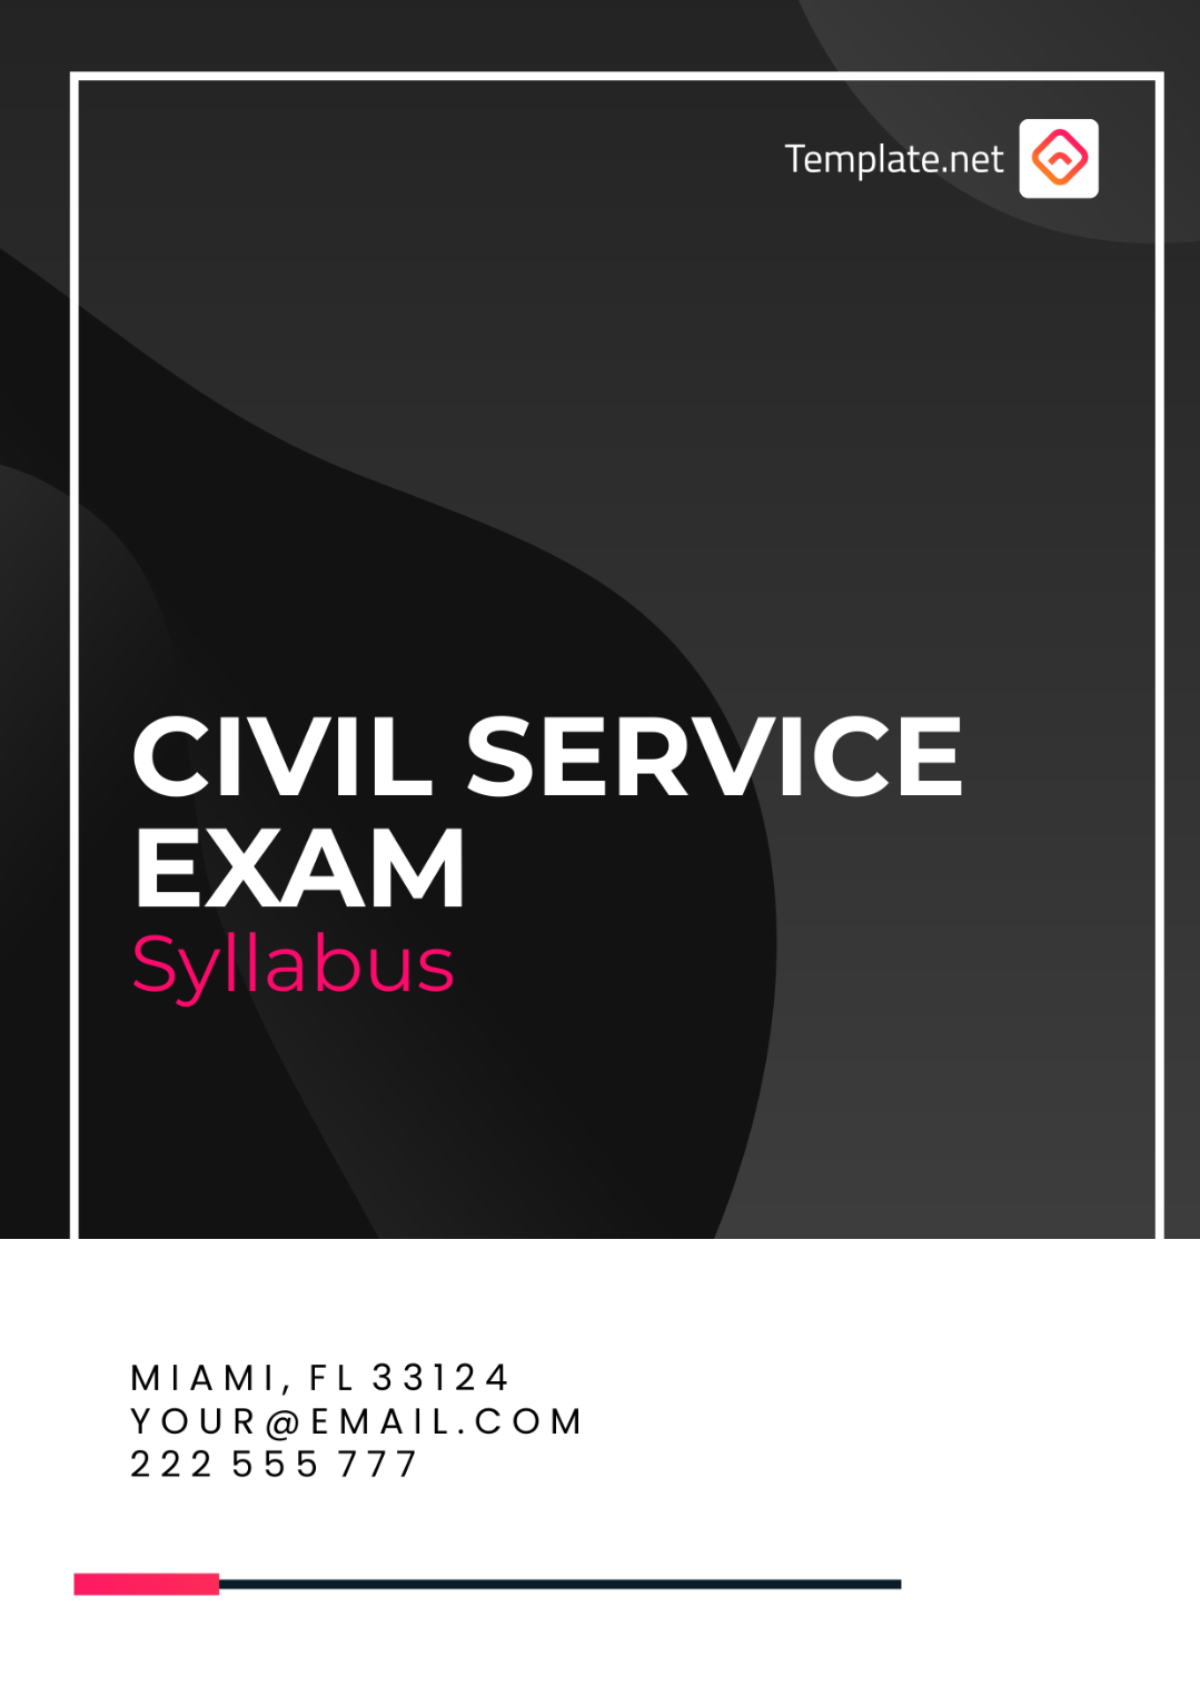 Civil Services Exam Syllabus Template